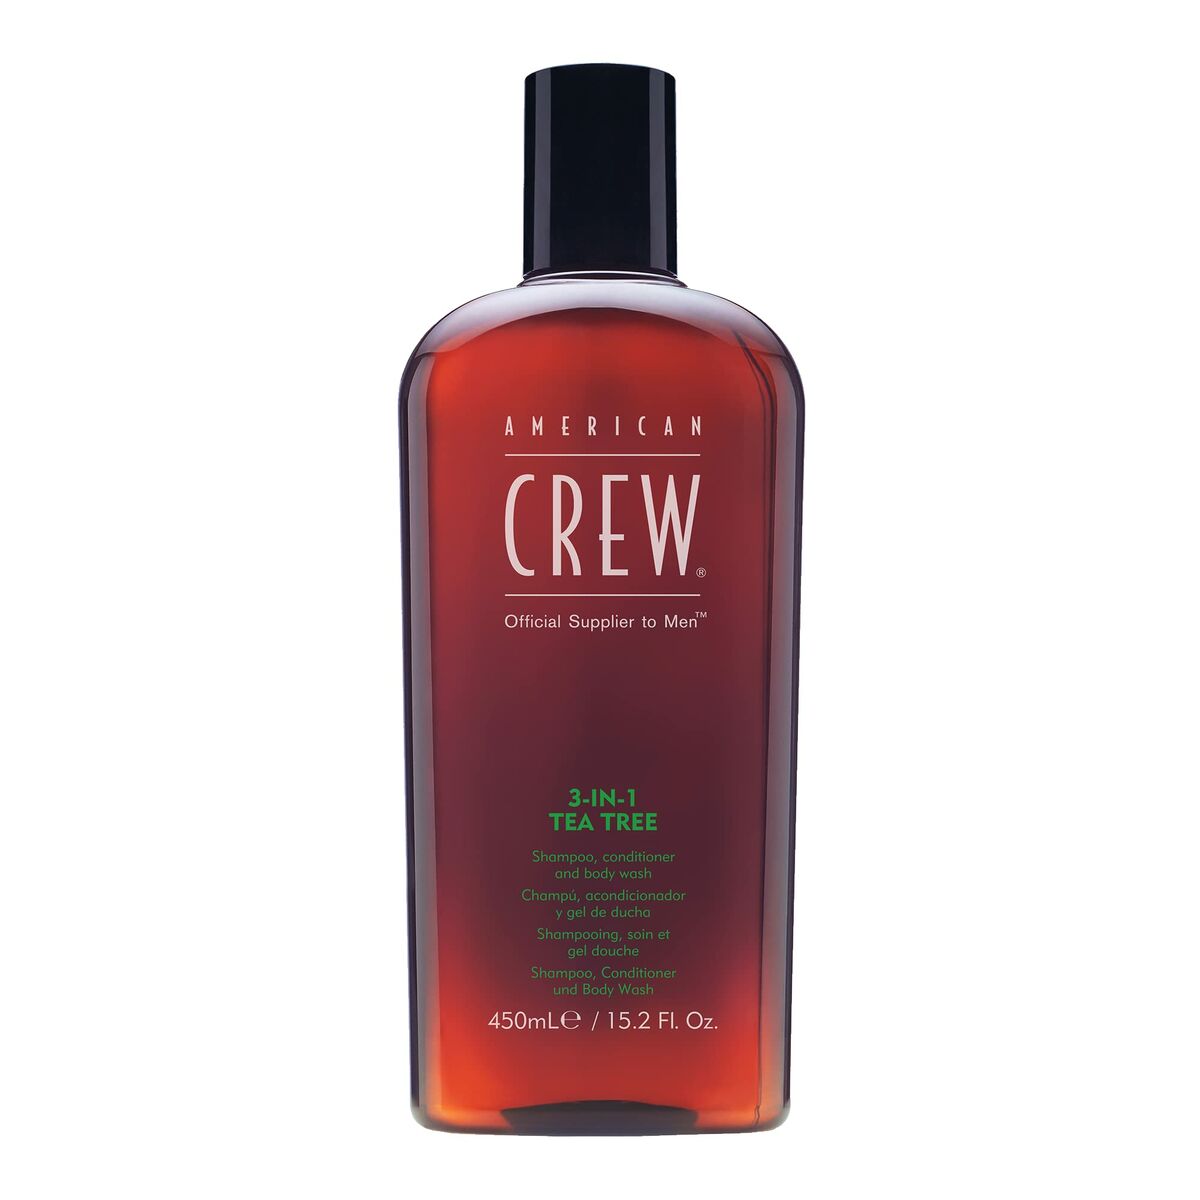 Shampoo, Conditioner and Shower Gel American Crew Tea tree 450 ml-0